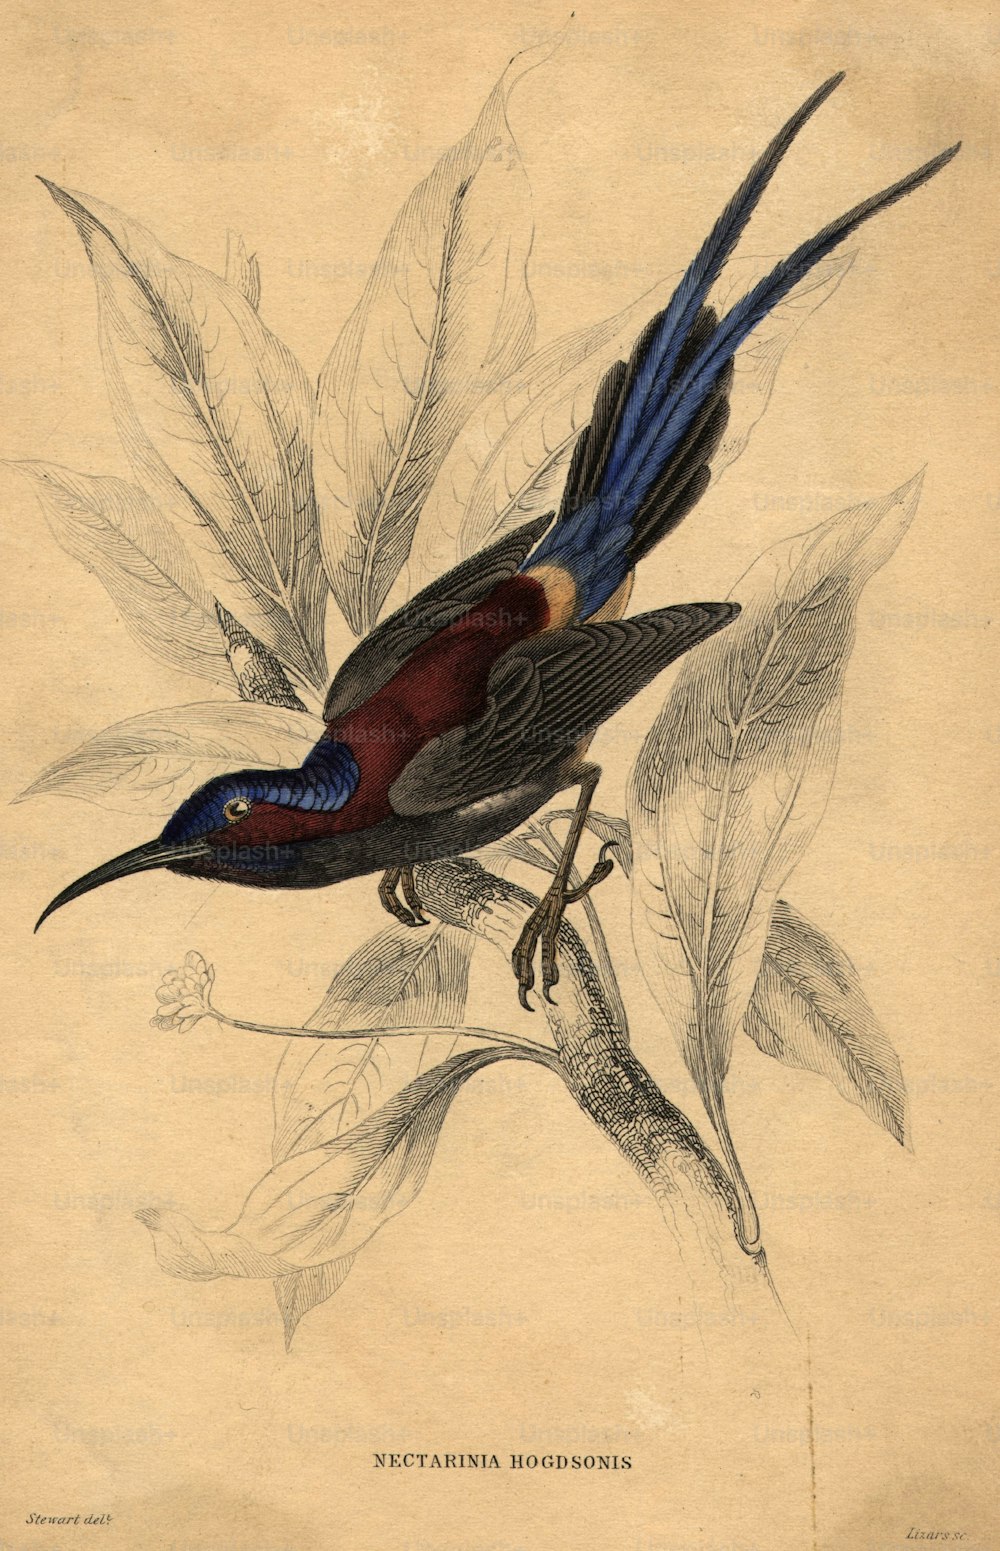 circa 1880: Nectarinia hogdsonis, un tipo de colibrí.  (Foto de Hulton Archive/Getty Images)